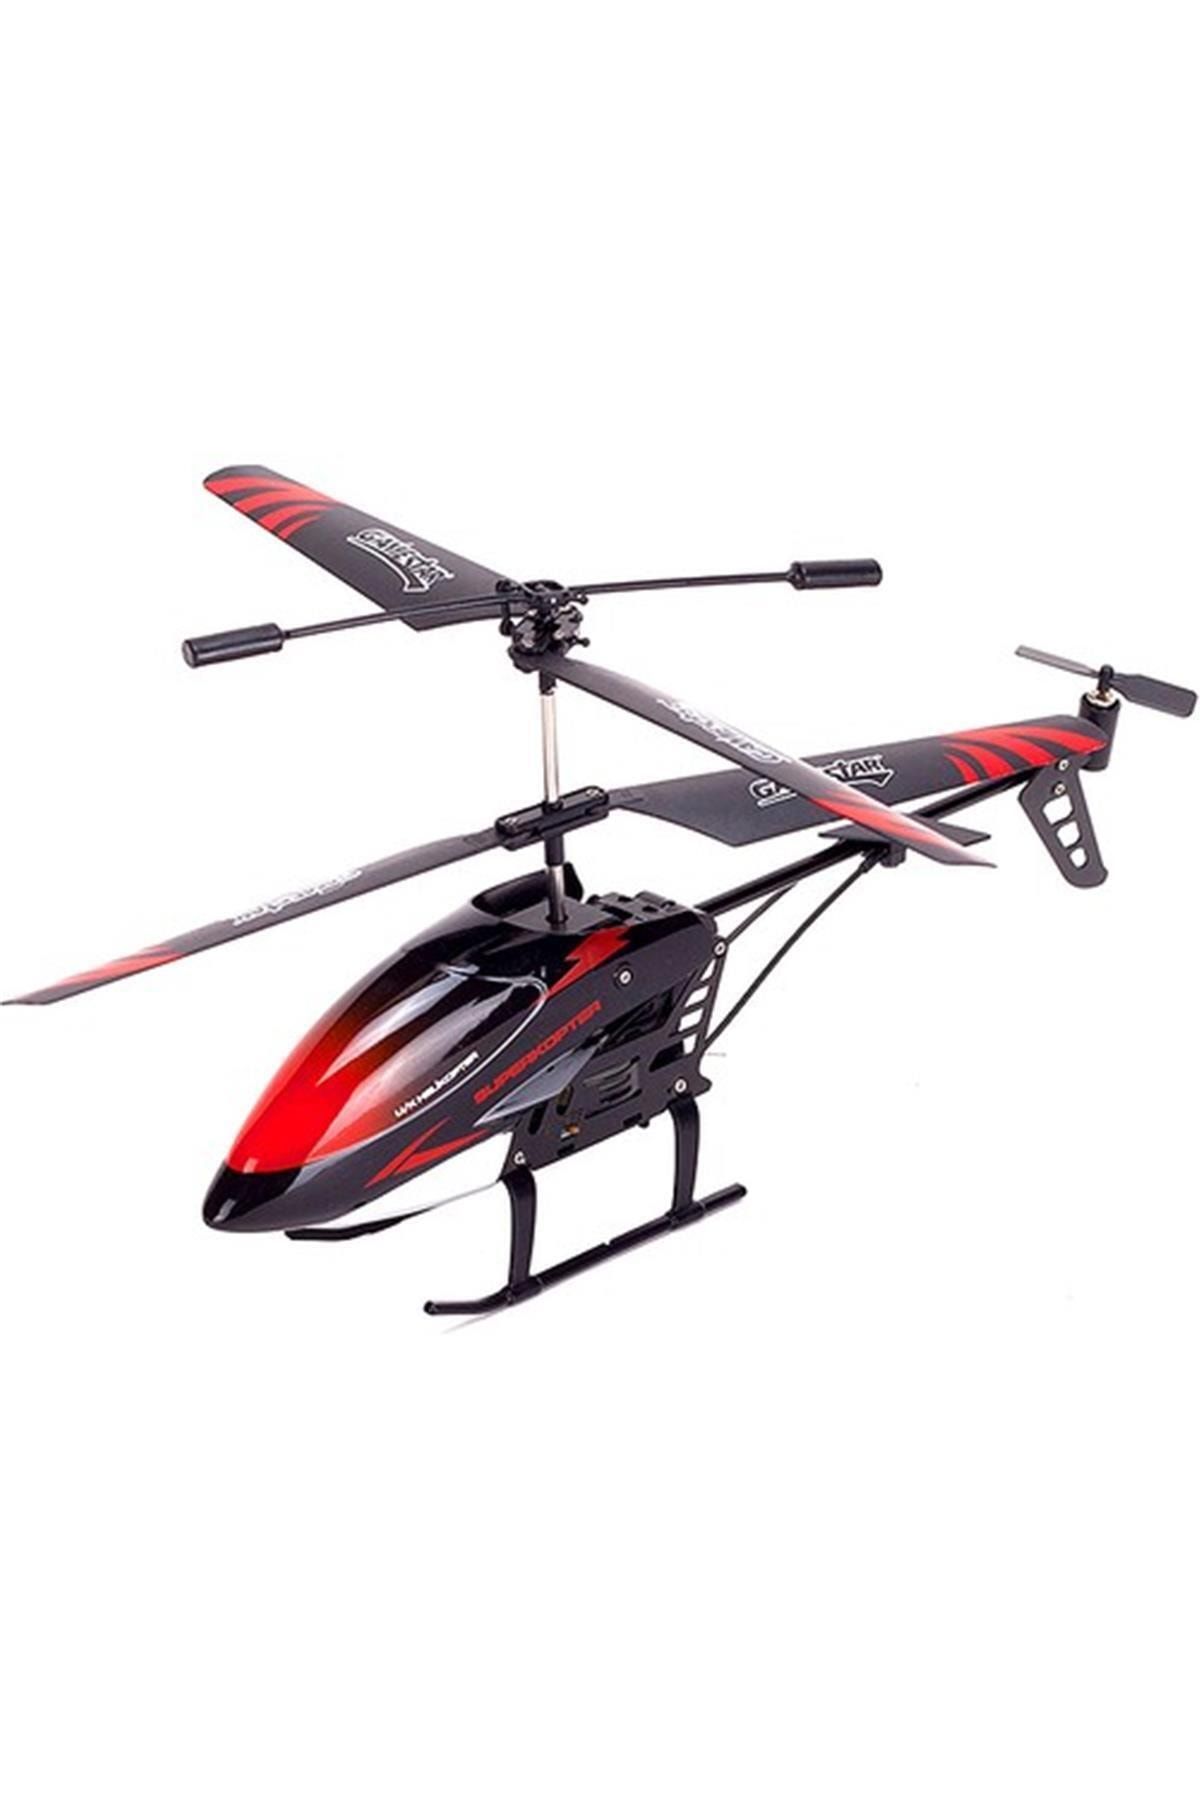 Furkan Toys Uzaktan Kumandalı Helikopter 3,5 Kanal Gyro Süper Helikopter